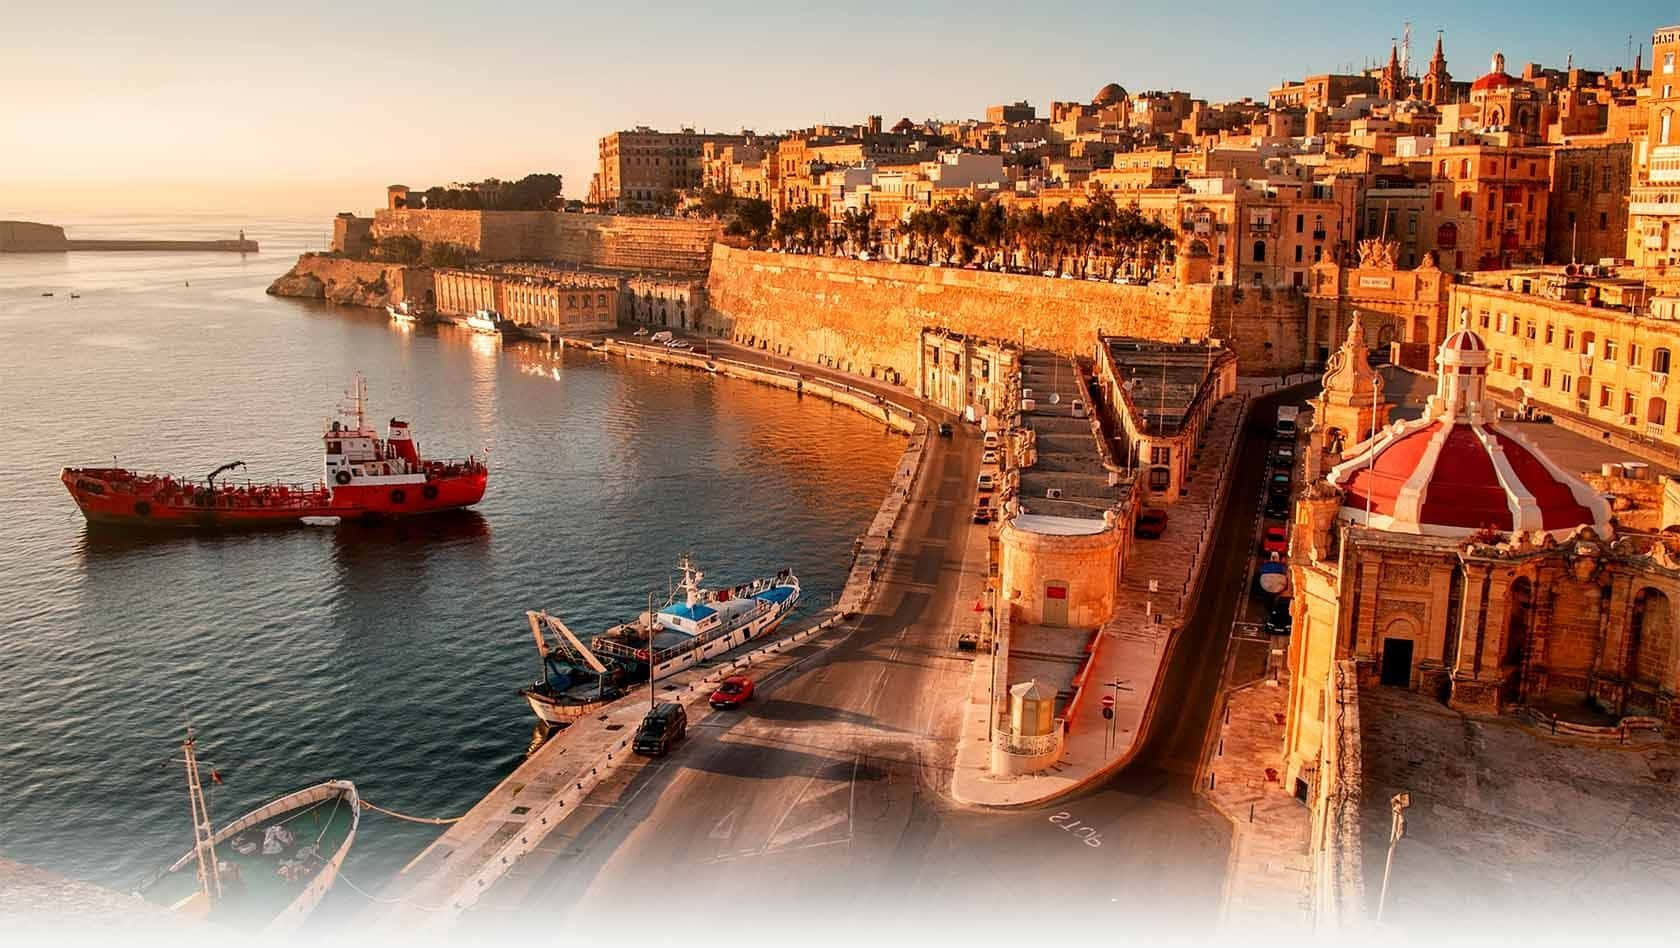 Vistapanorámica De La Costa De Malta.